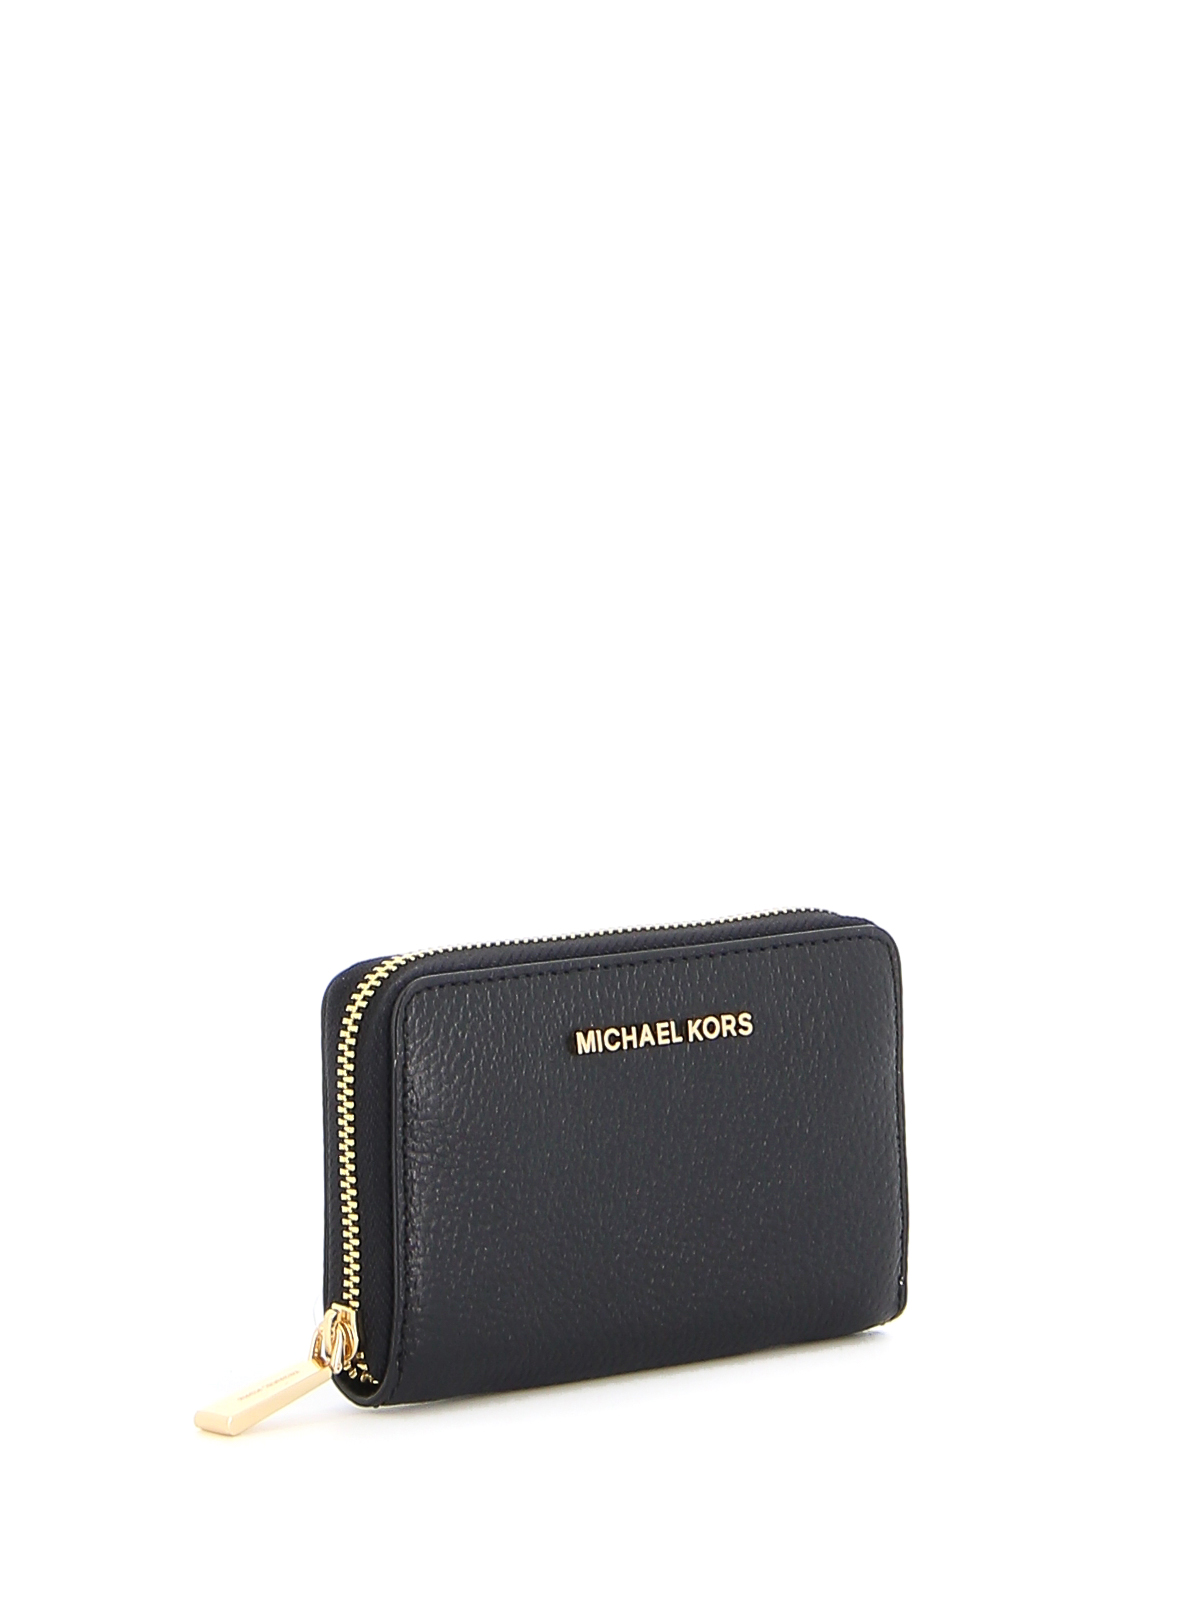 Michael Kors Small Women Leather Oval Crossbody Bag Handbag Shoulder Purse  Black | eBay